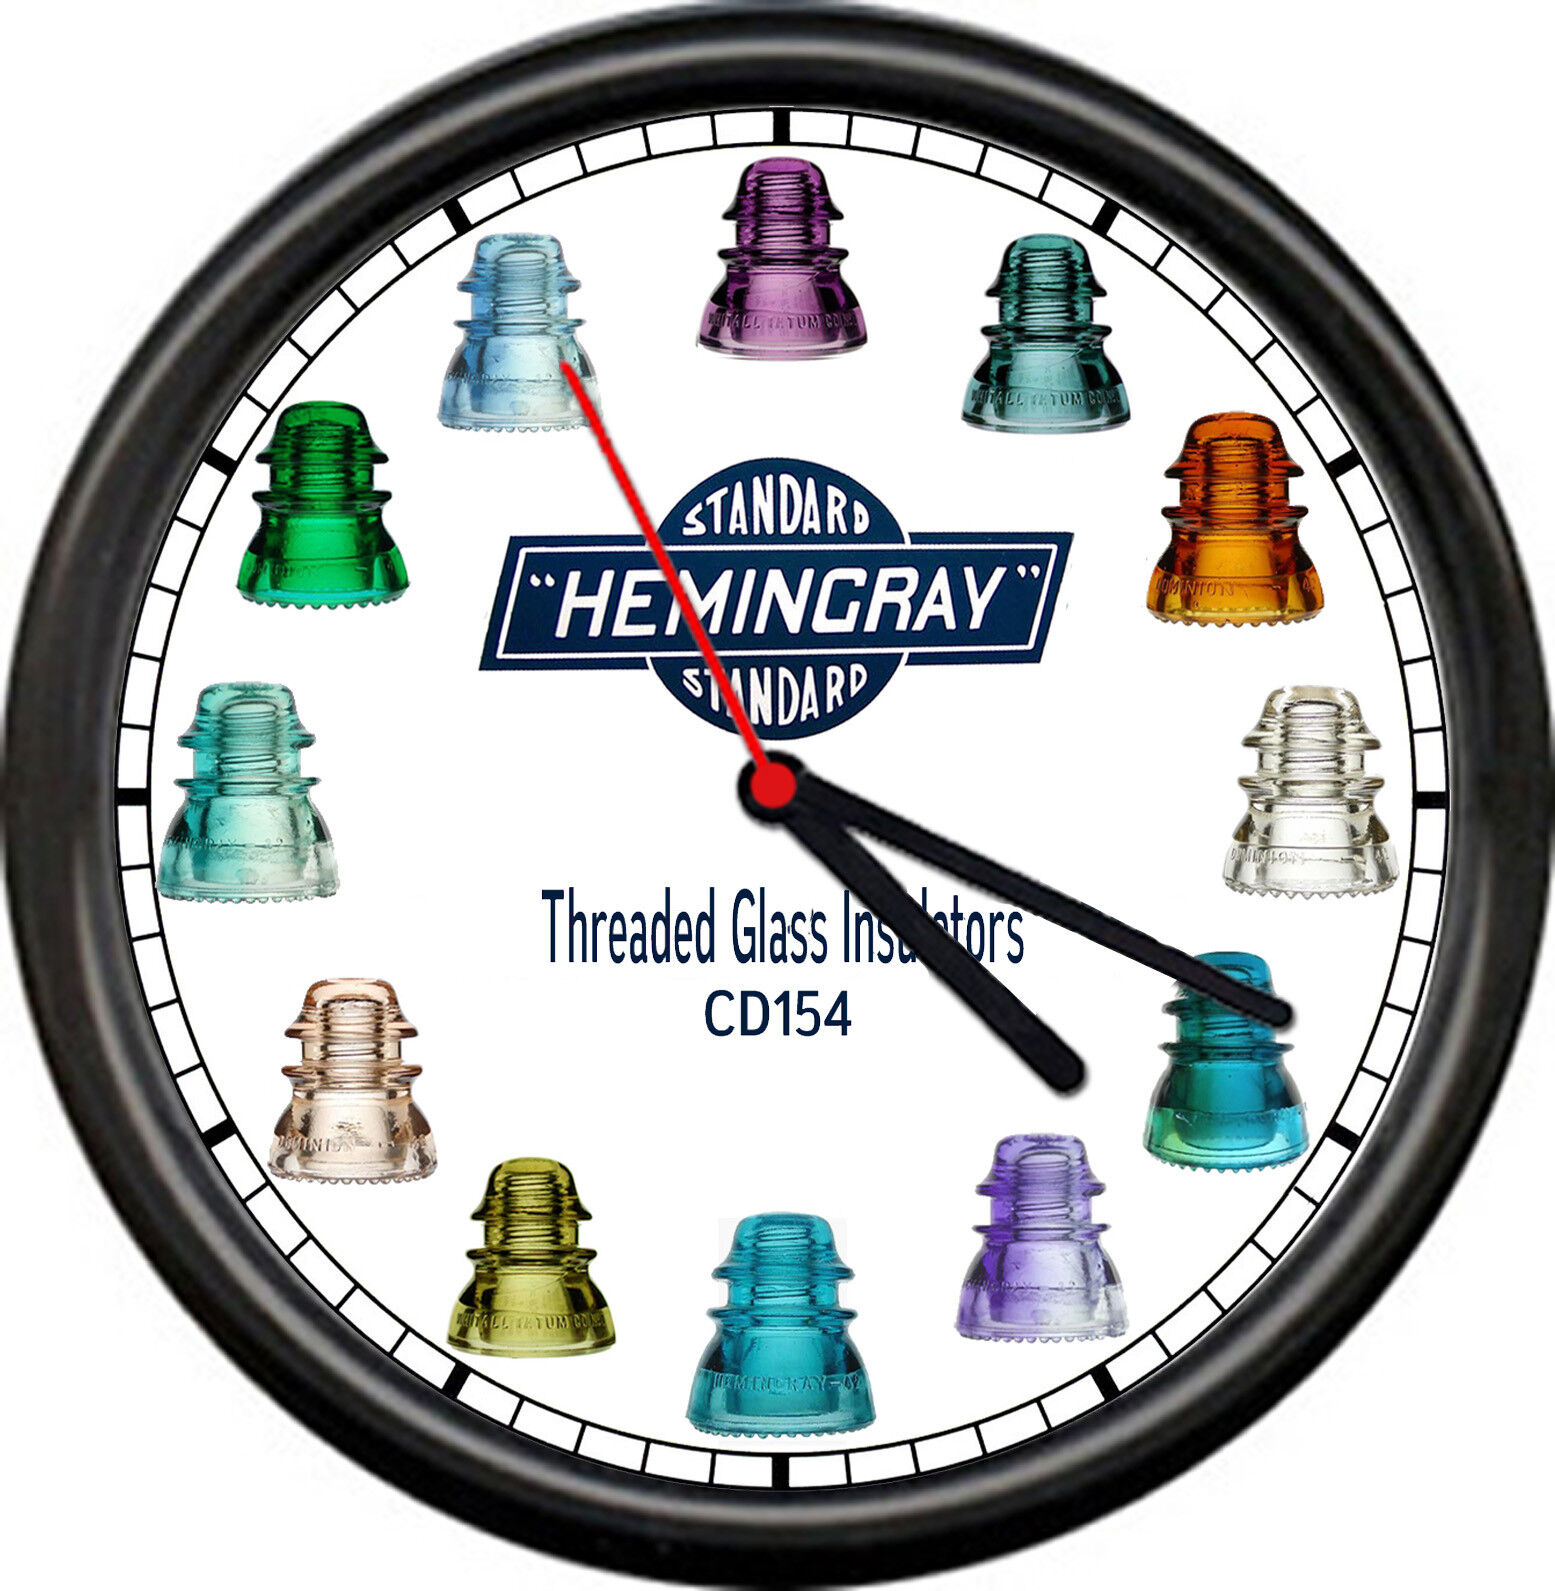 Hemingray Screw Glass Insulators CD154 Electrical Depression Sign Wall Clock